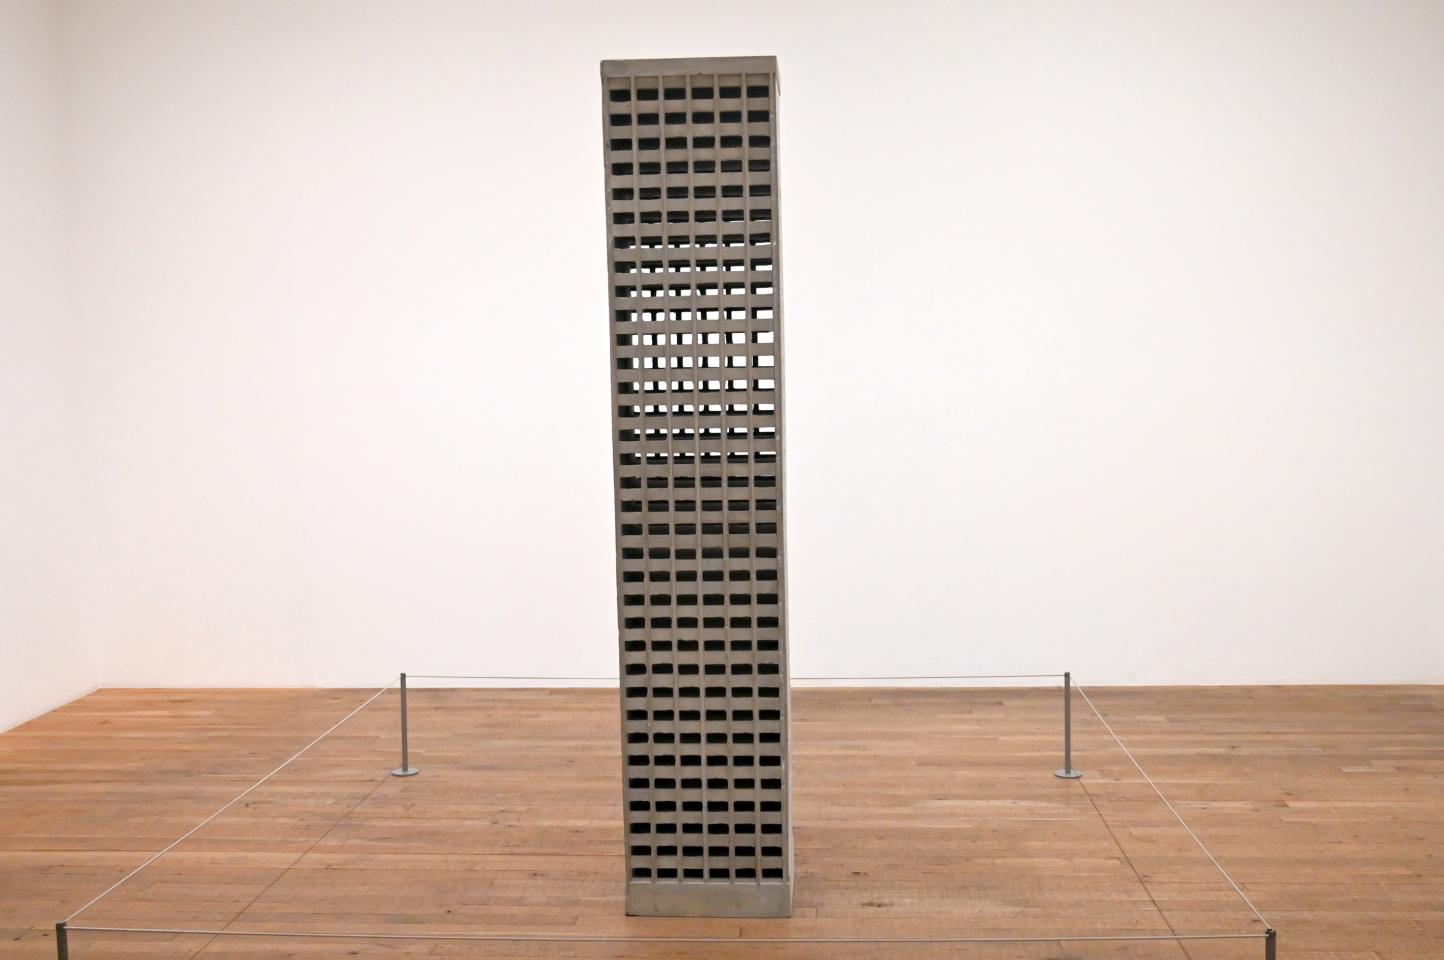 Marwan Rechmaoui (2001), Denkmal für die Lebenden, London, Tate Gallery of Modern Art (Tate Modern), Artist and Society 1, 2001, Bild 1/3